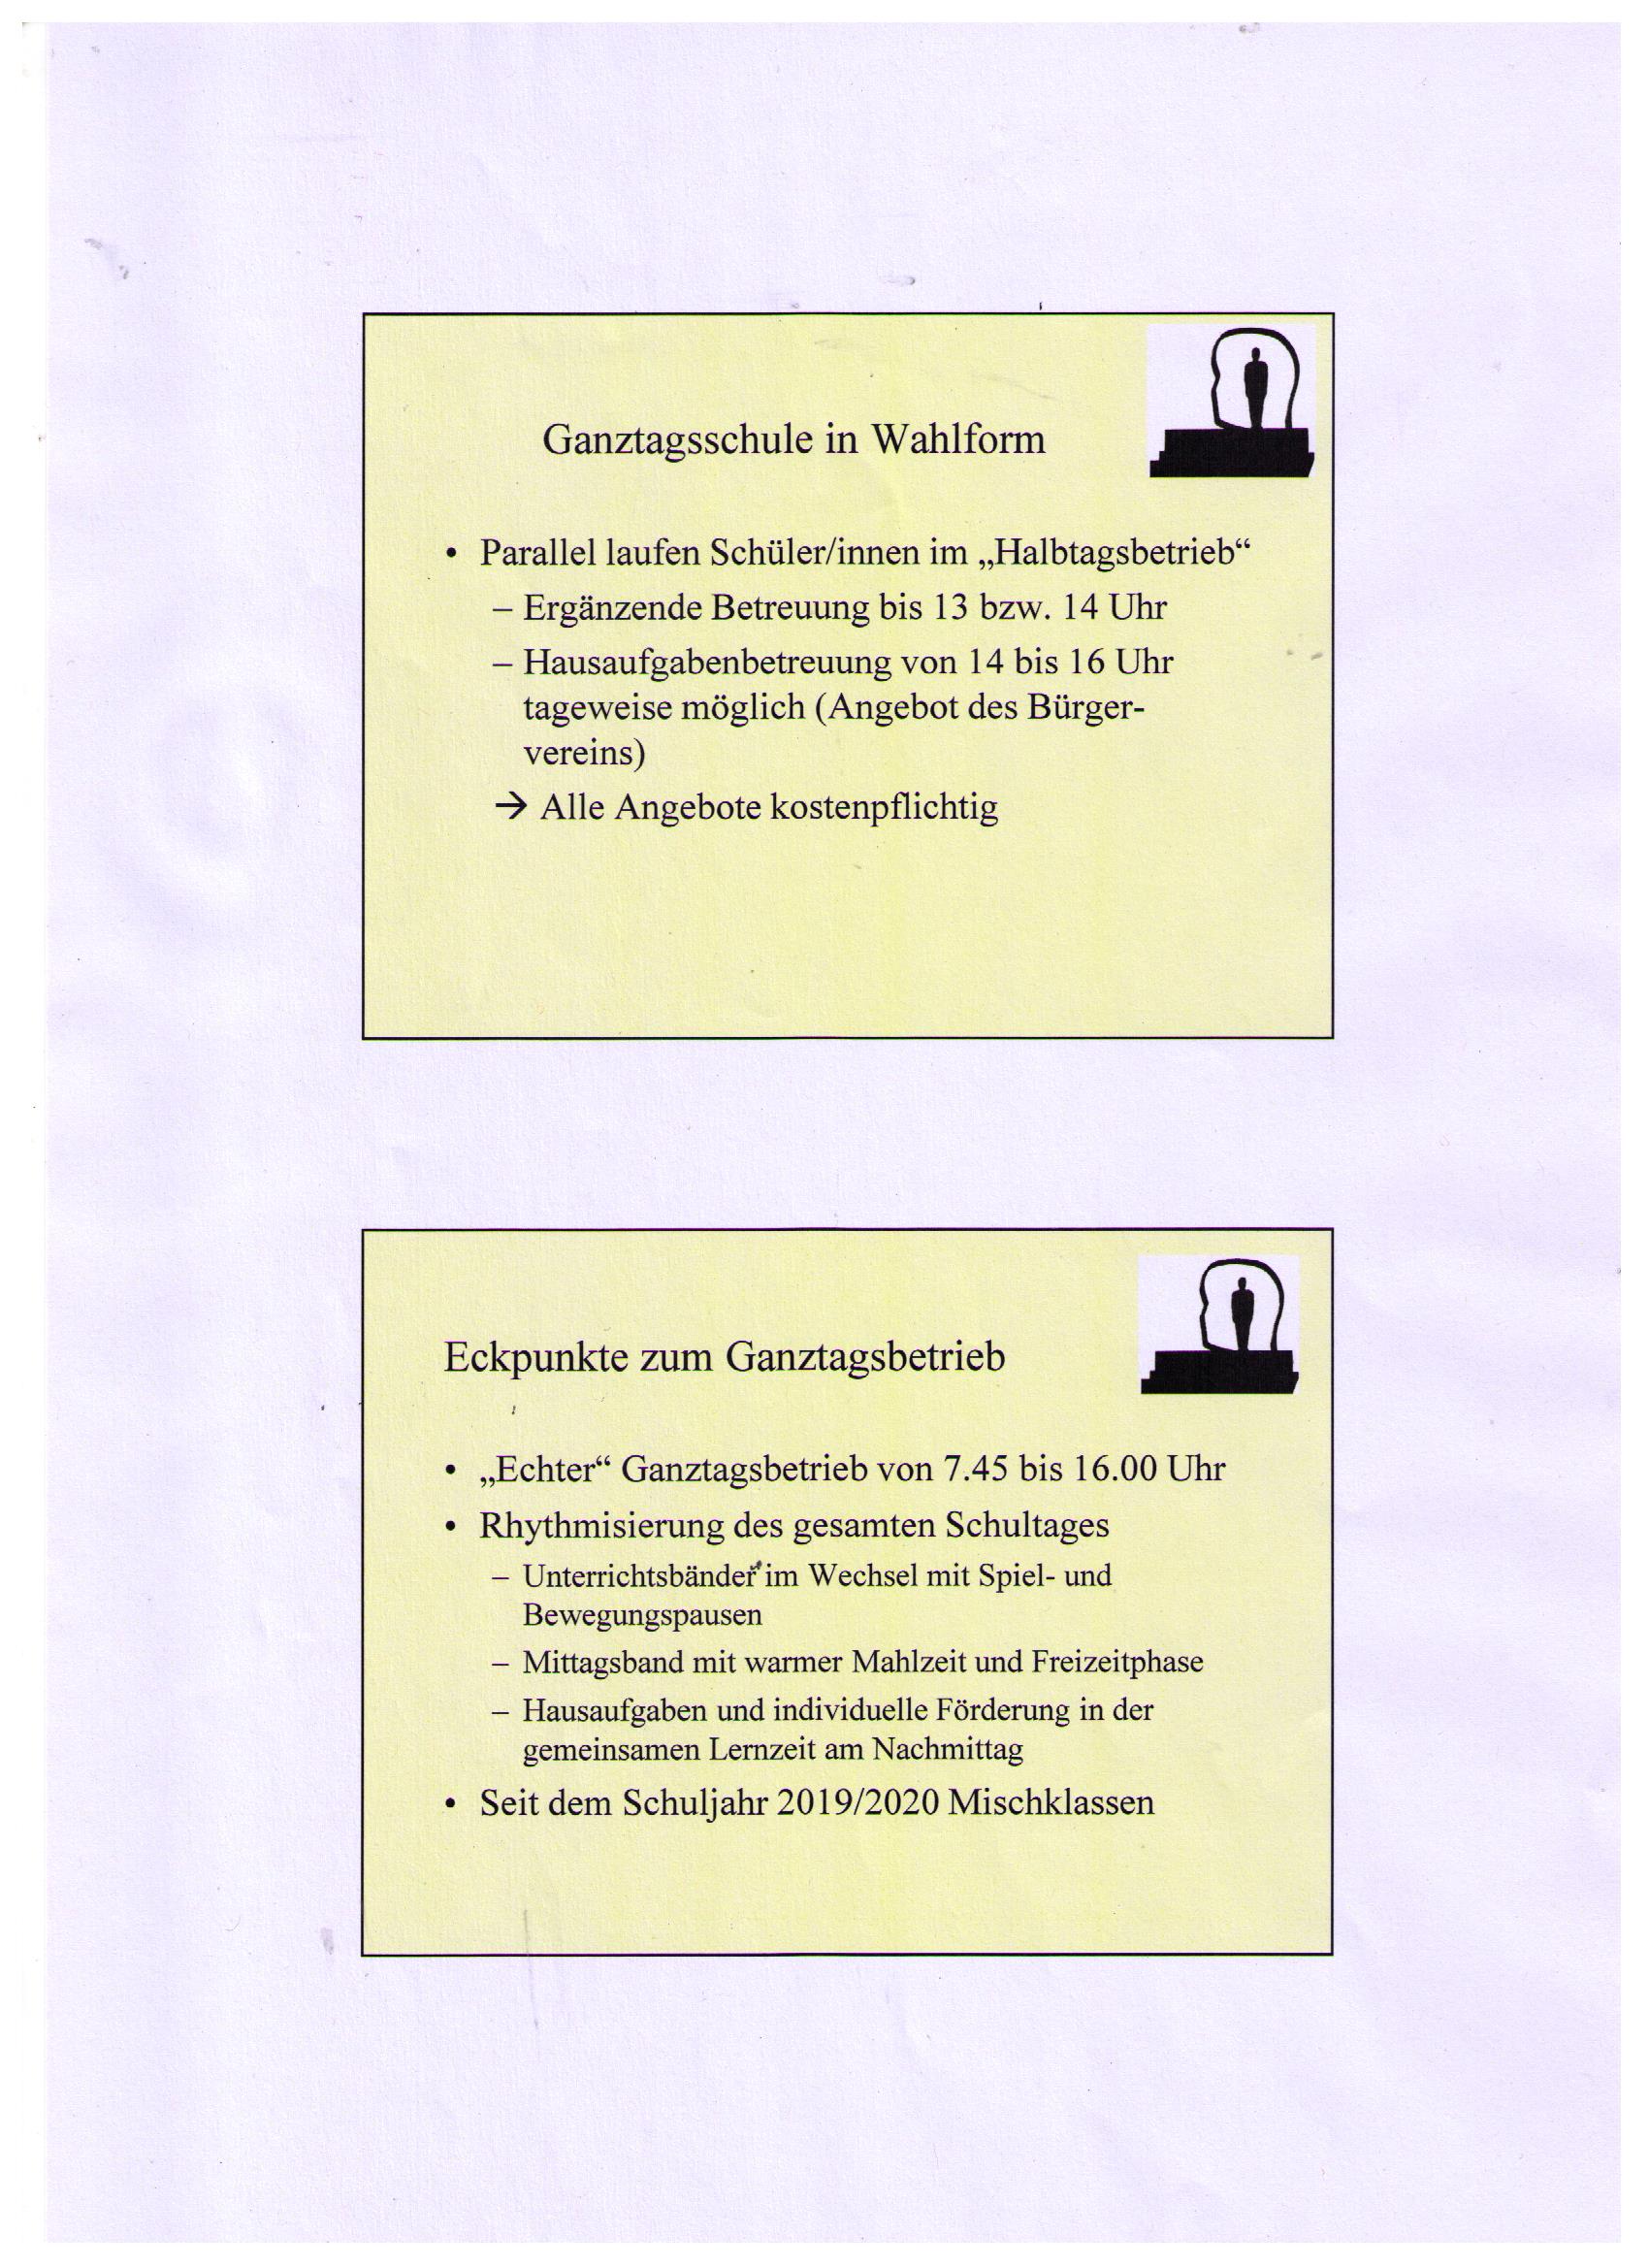 https://eichendorffschule.public-presentation-solutions.com/wp-content/uploads/2021/01/002-1.jpg